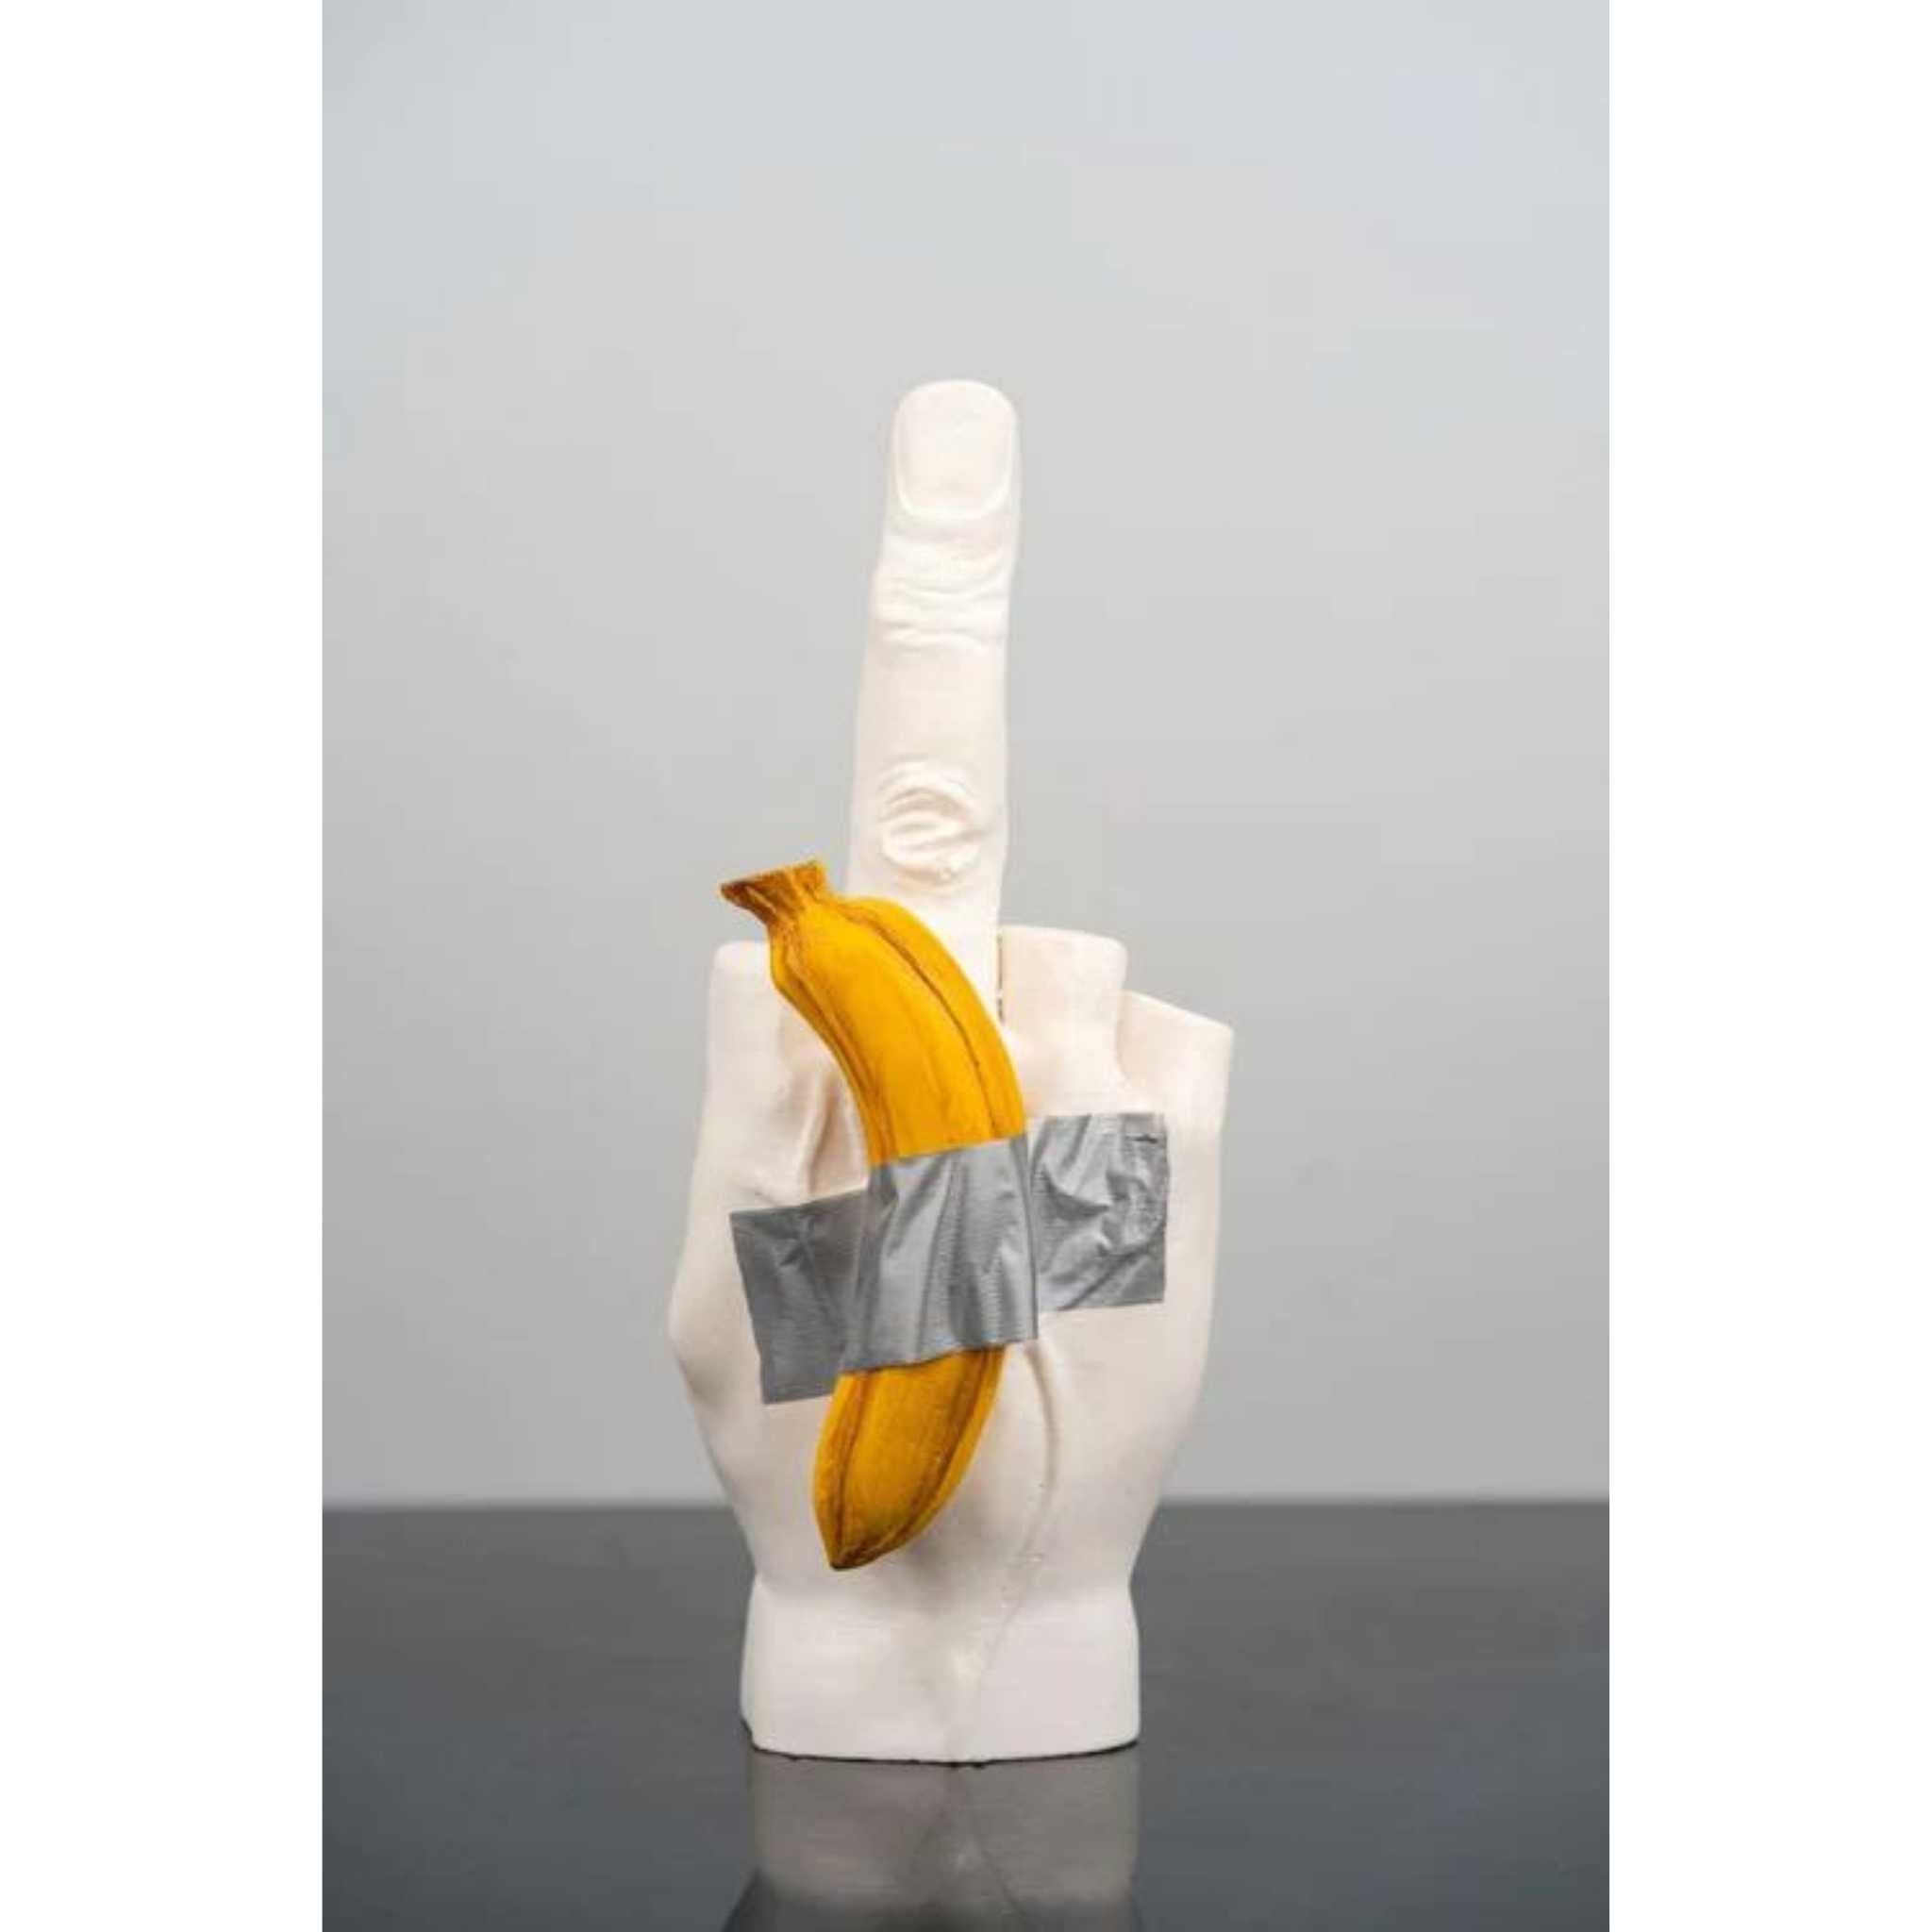 Banana Grab: The Banksy Sculpture with Hand